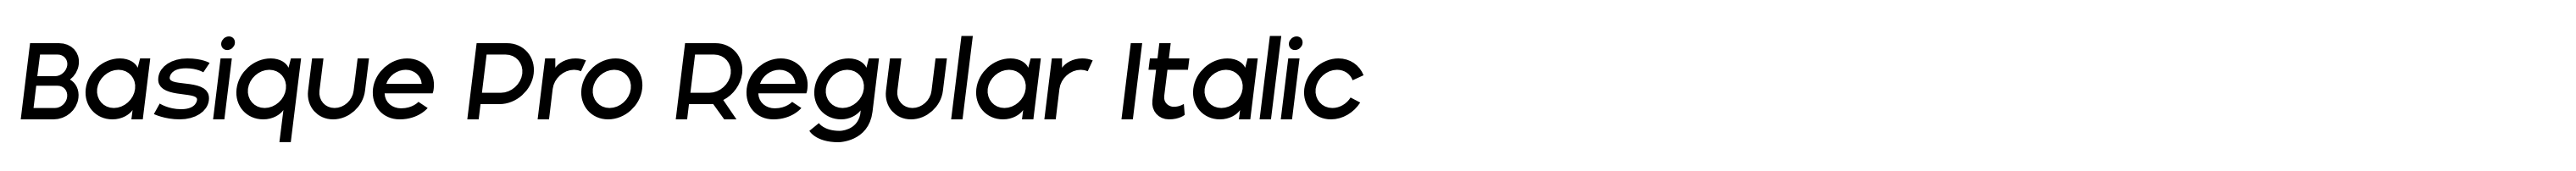 Basique Pro Regular Italic